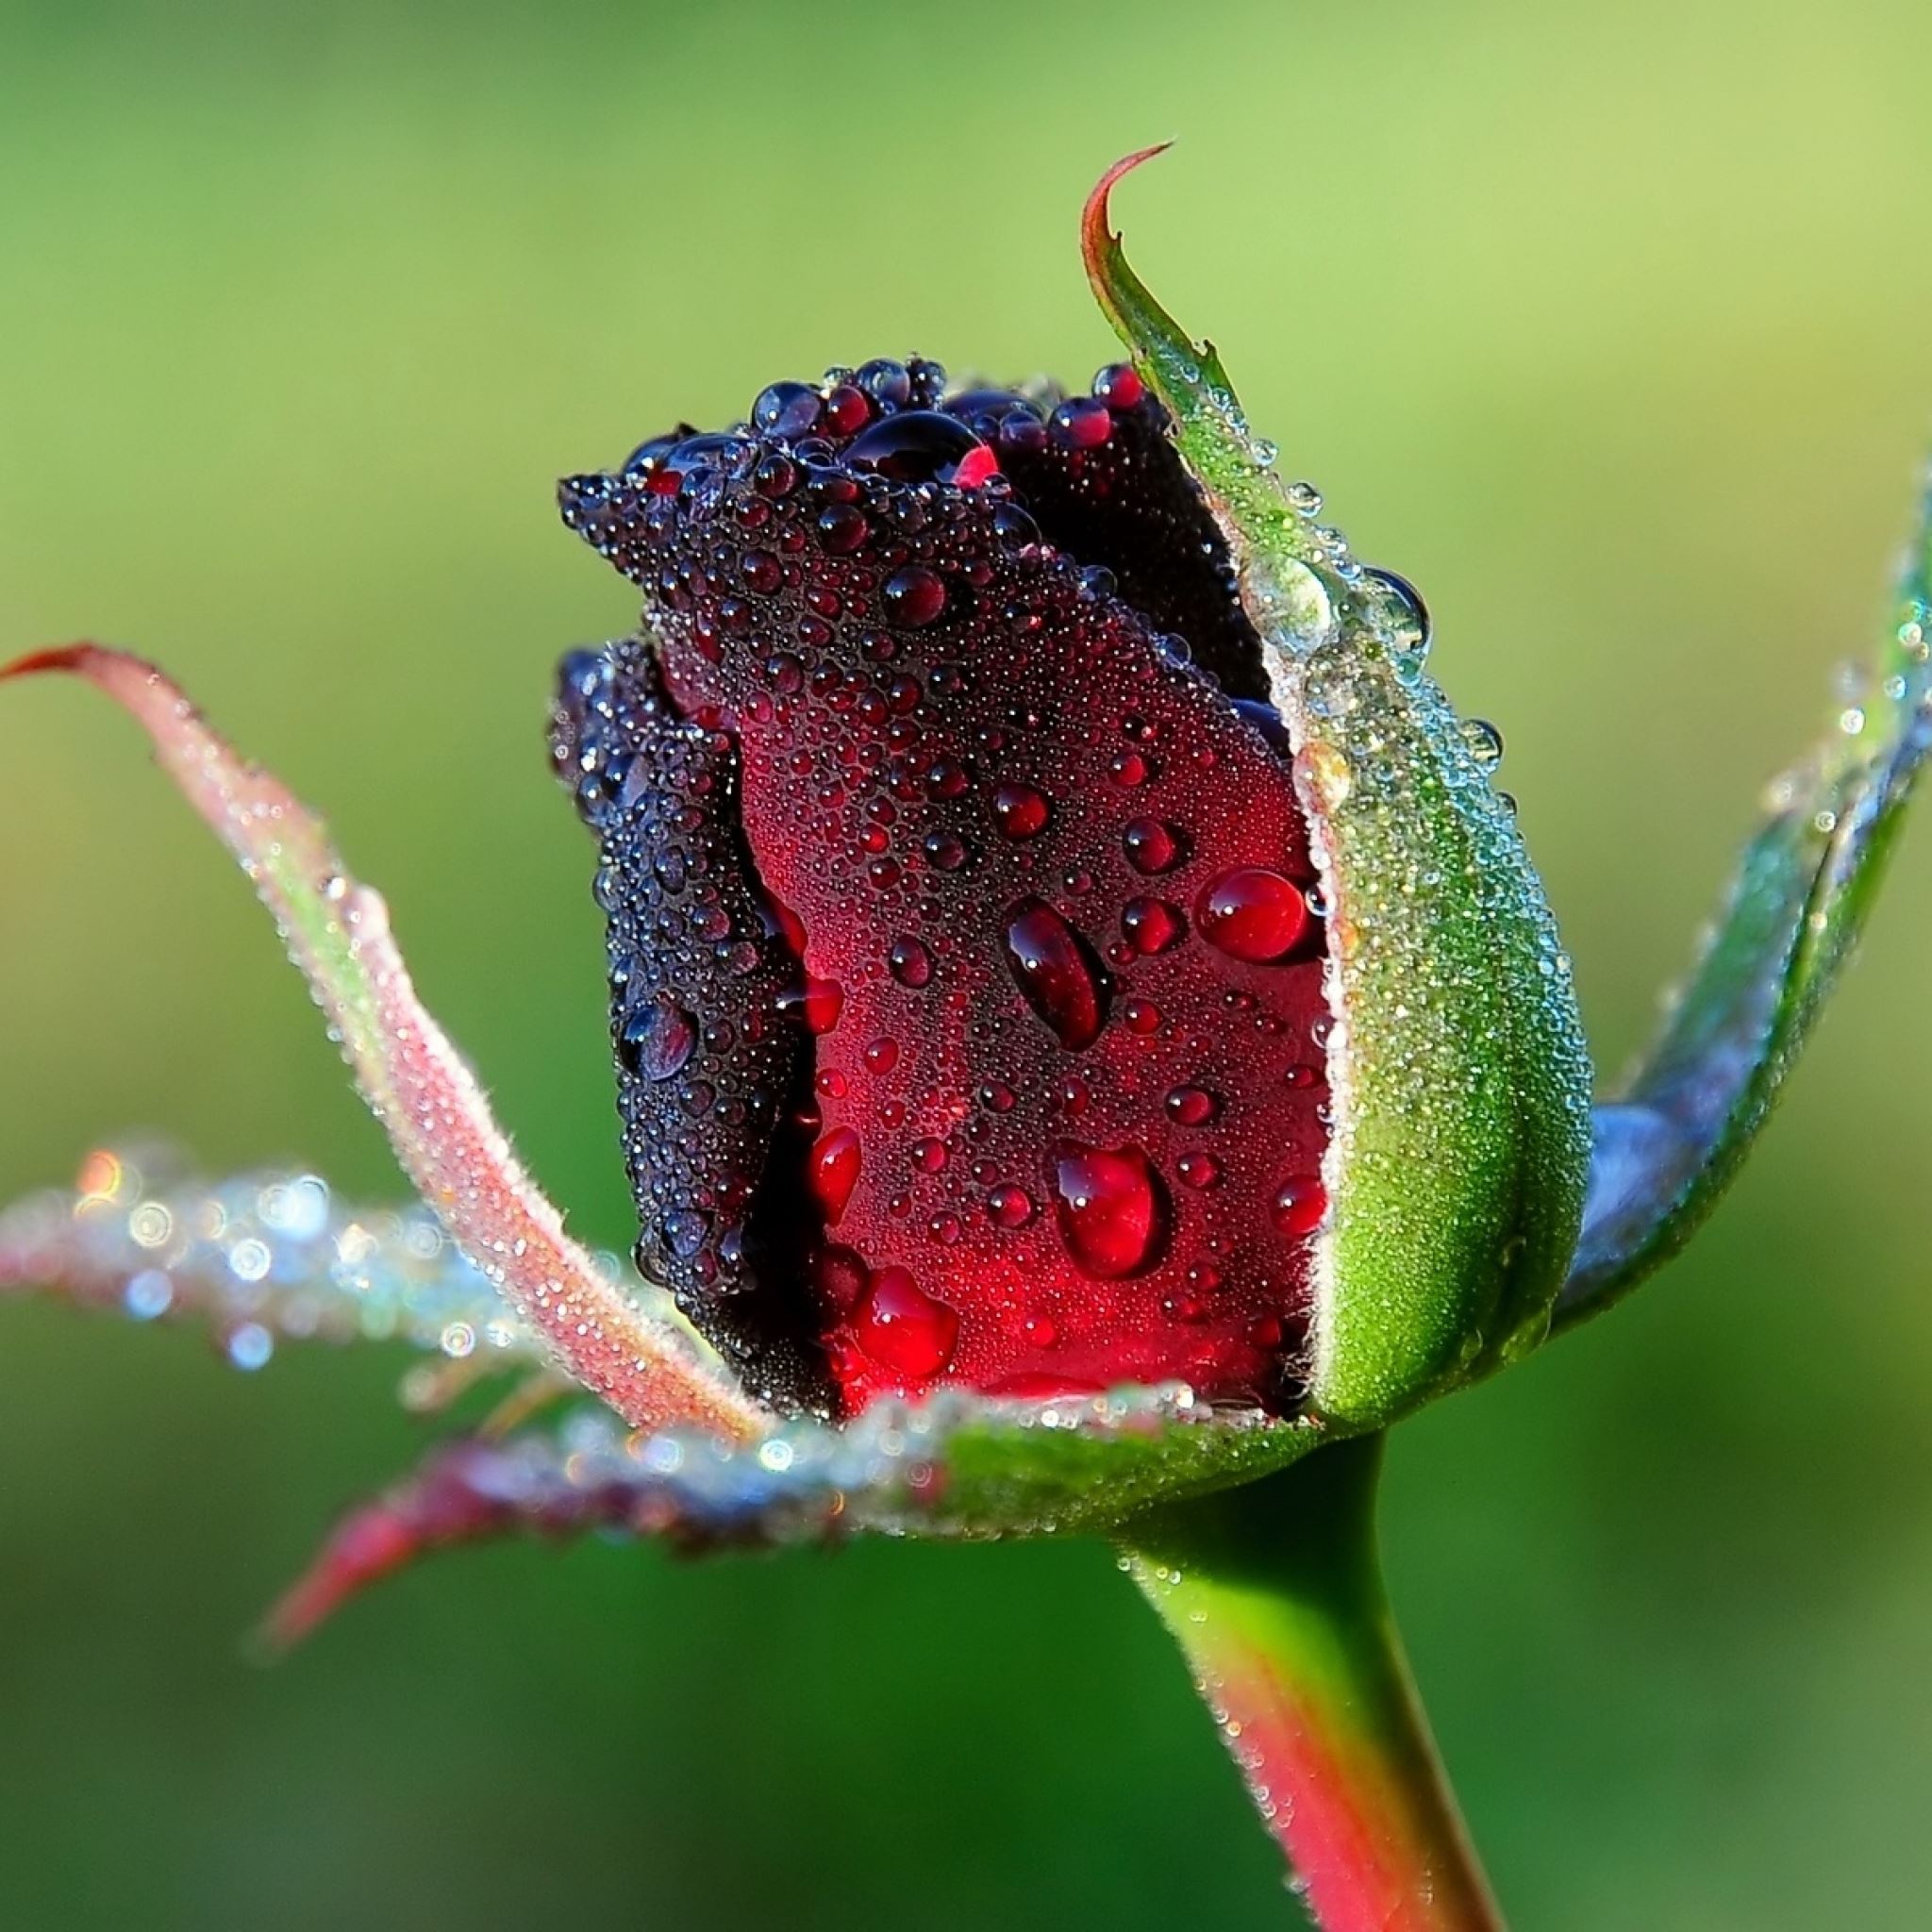 Rose bud flower drops dew iPad Air wallpaper 